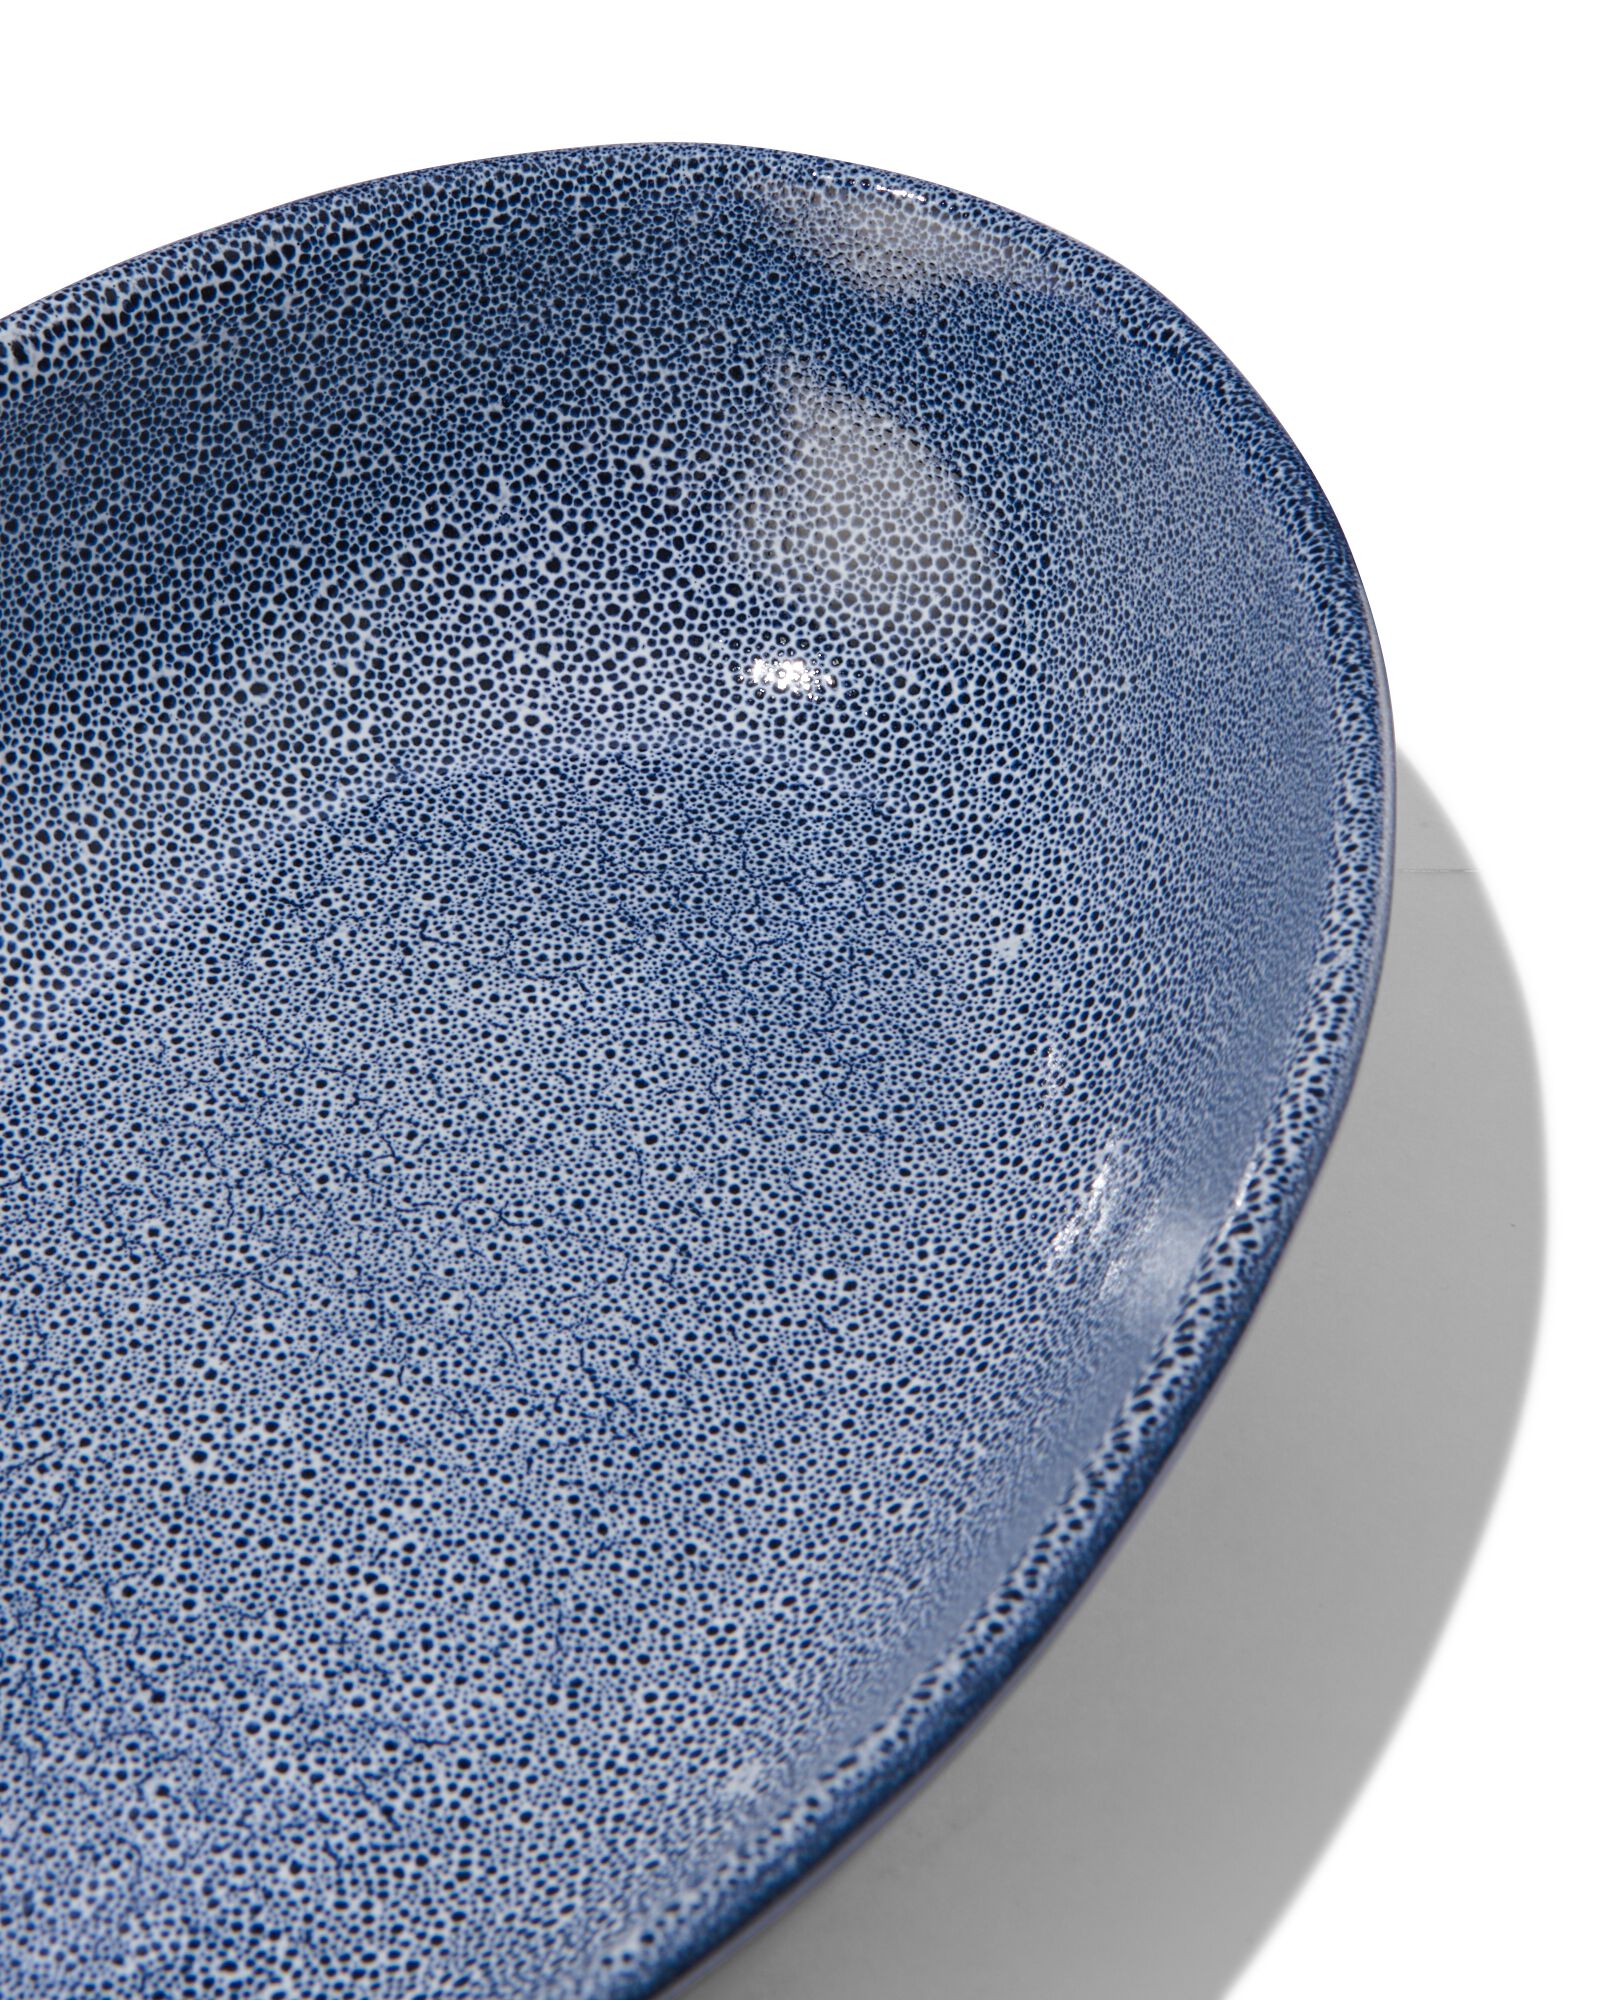 hohe Schale Porto, 30 cm, reaktive Glasur, weiß/blau - 9602260 - HEMA